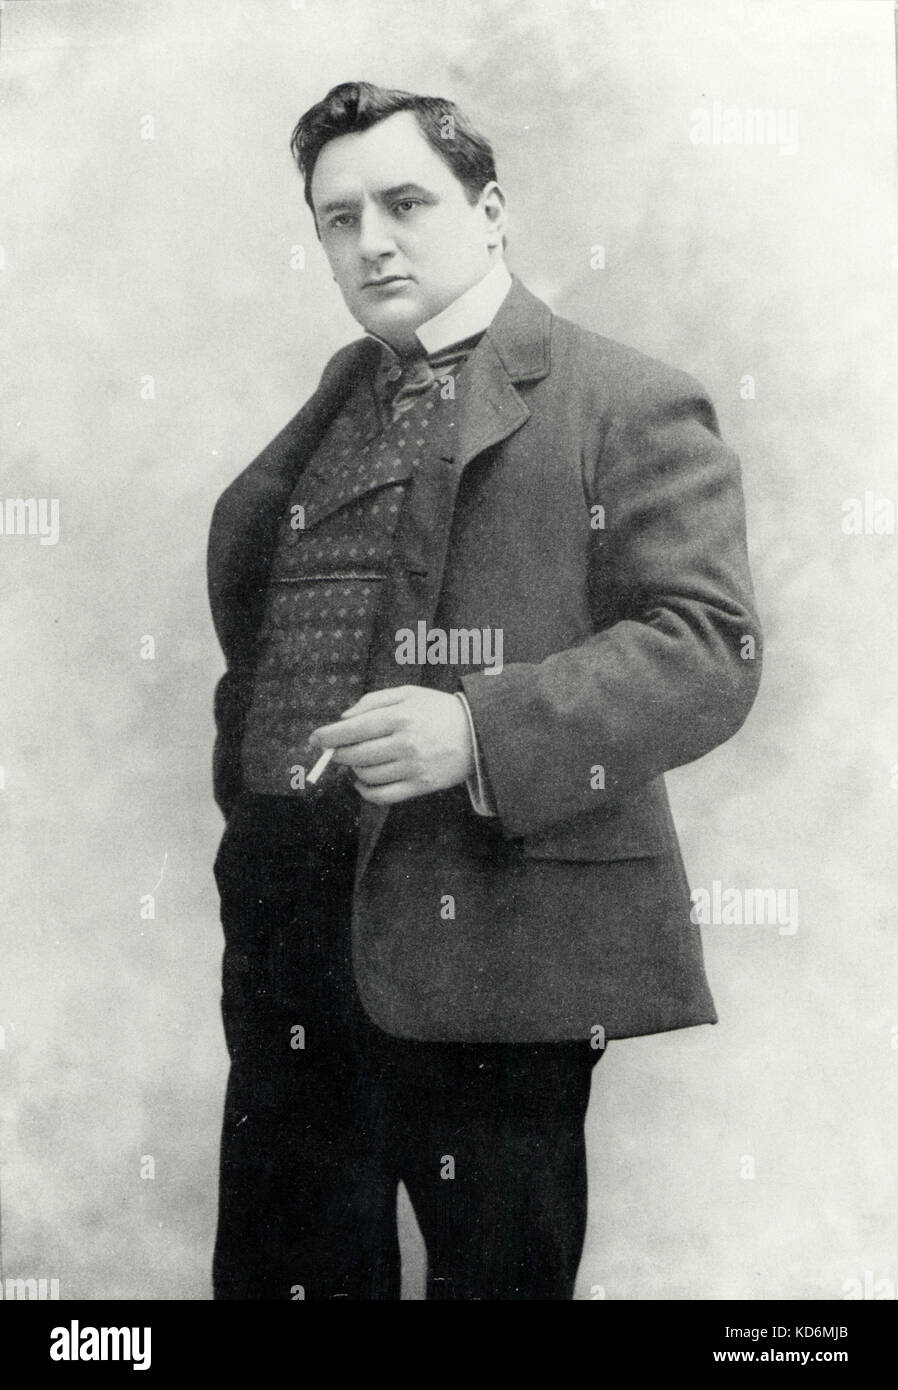 Giraldoni, Eugenio portrait of him smoking c. 1900. French baritone 1871 - 1924.  Contrast with anti-smoking campaign of late 20th century. Stock Photo